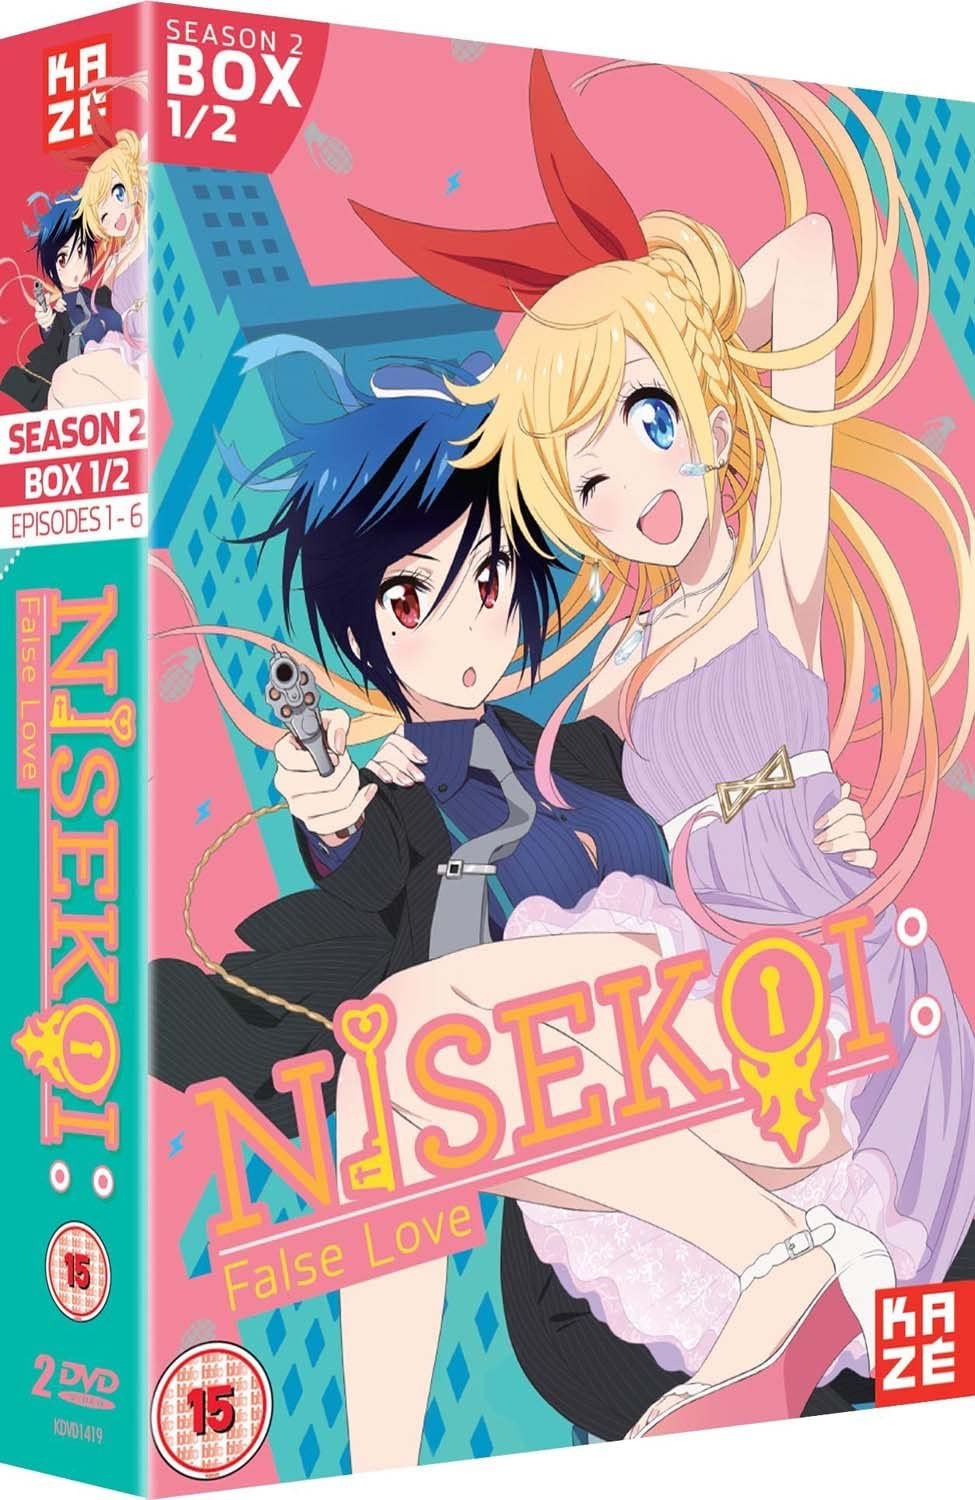 Anime Bluray - Nisekoi: False Love Season 2 Part 1 (Episodes 1 - 6)